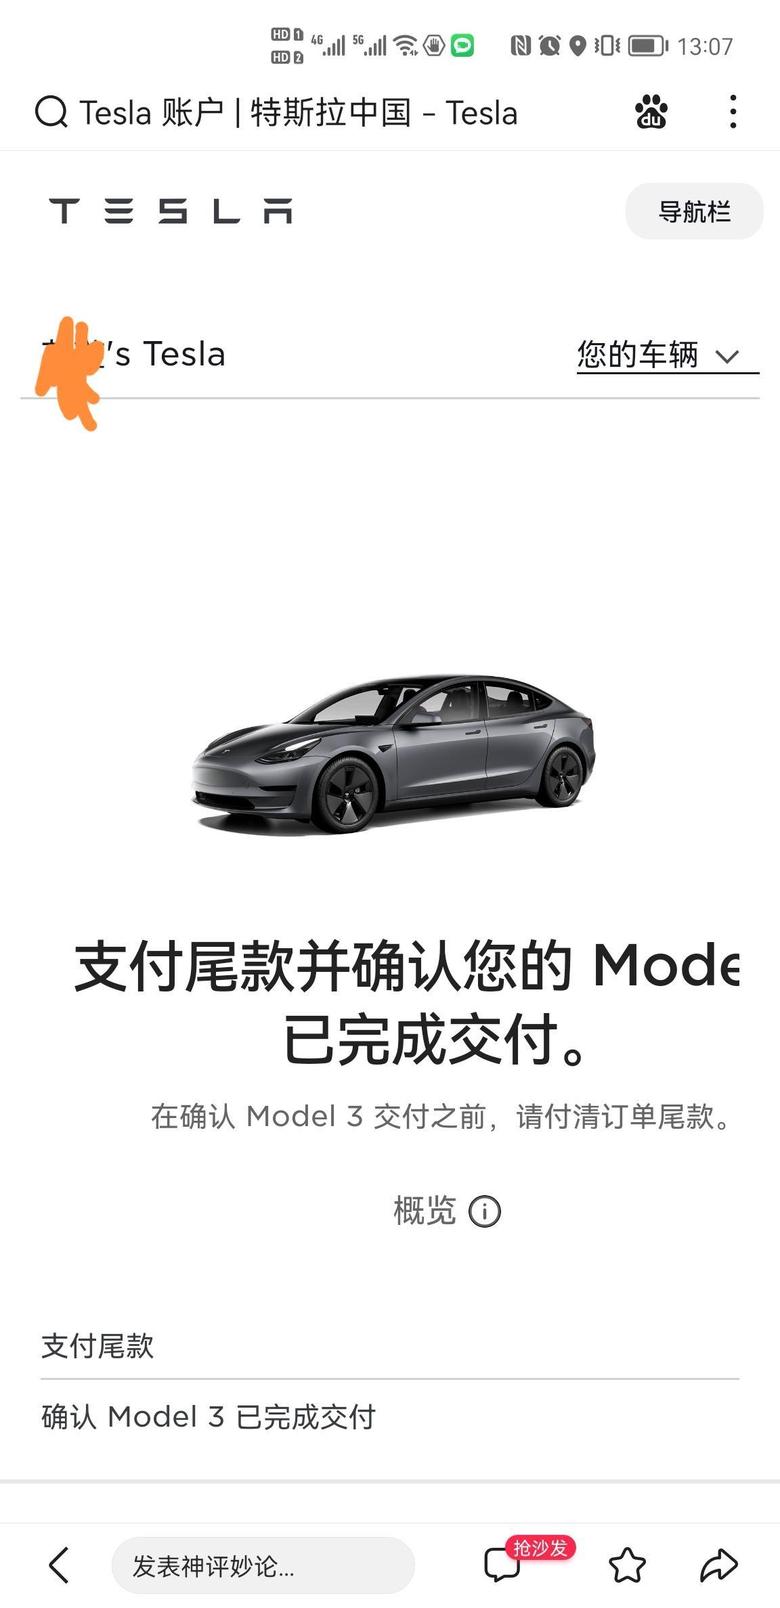 model 3 重庆200（3000）已匹配，银外黑內18，10.11下定，今天客服联系匹配，已完成付款，预计周内提车，大家加油。